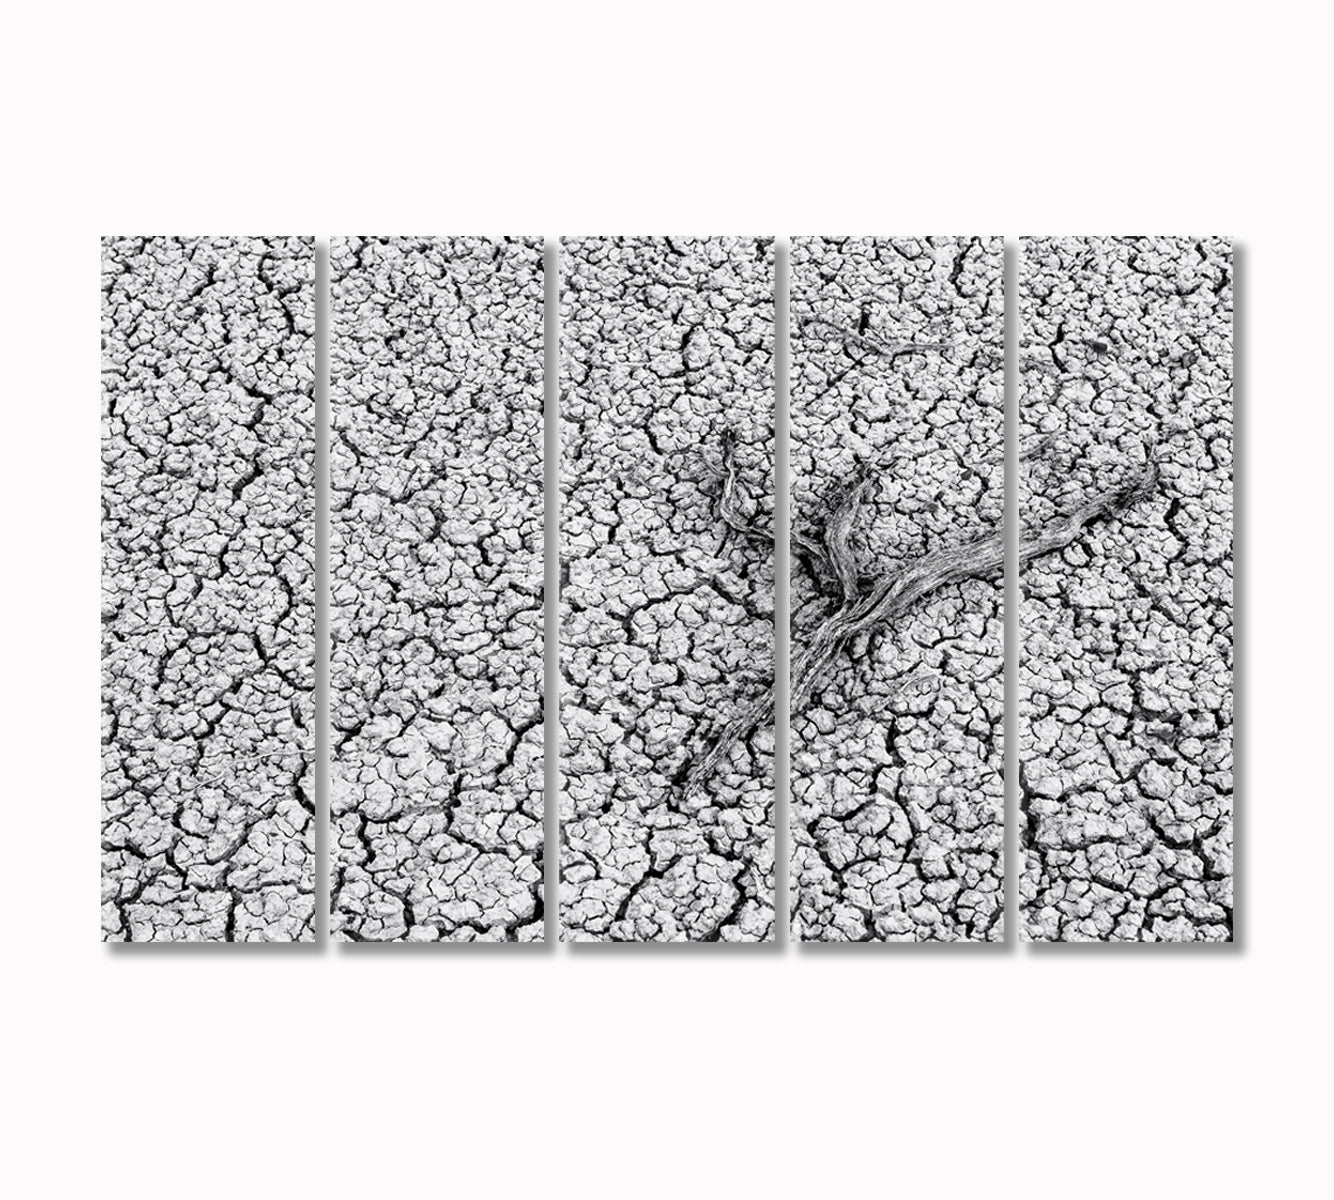 Dry Branch on Cracked Ground Canvas Print-Canvas Print-CetArt-5 Panels-36x24 inches-CetArt